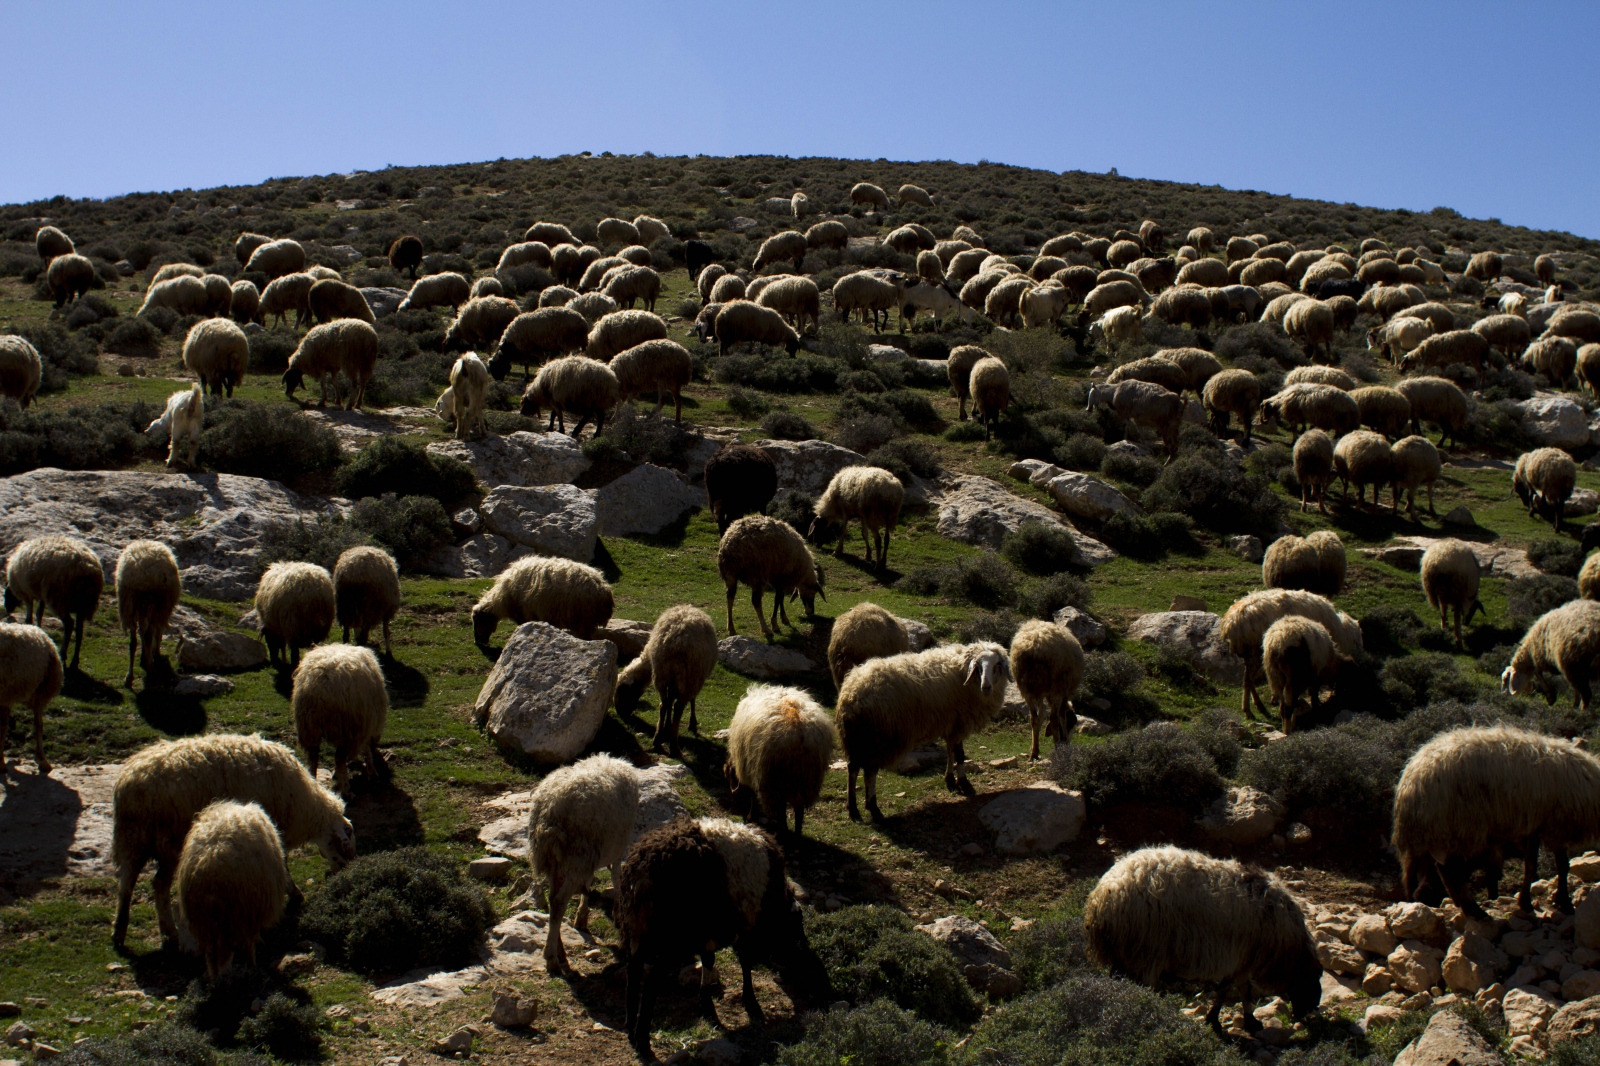 A Shepherd in Tuba - The Jundiyeh family graze their livestock in the valleys...